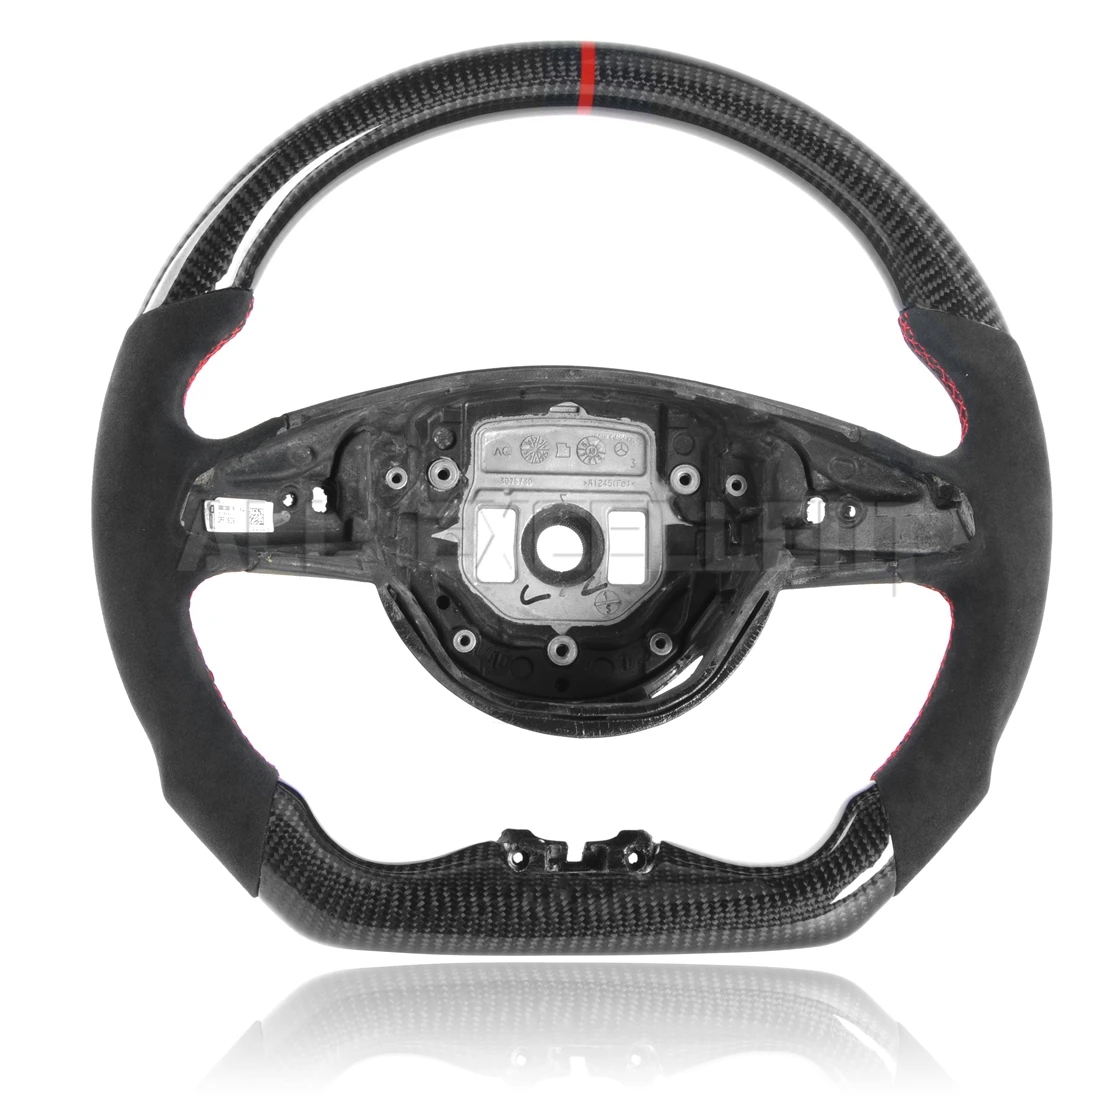 

Customized Fits For Mercedes AMG C63 W212 W205 W204 W213 Class GLA GLC GLS 2012-2020 Carbon Fiber Alcanrata Steering Wheel